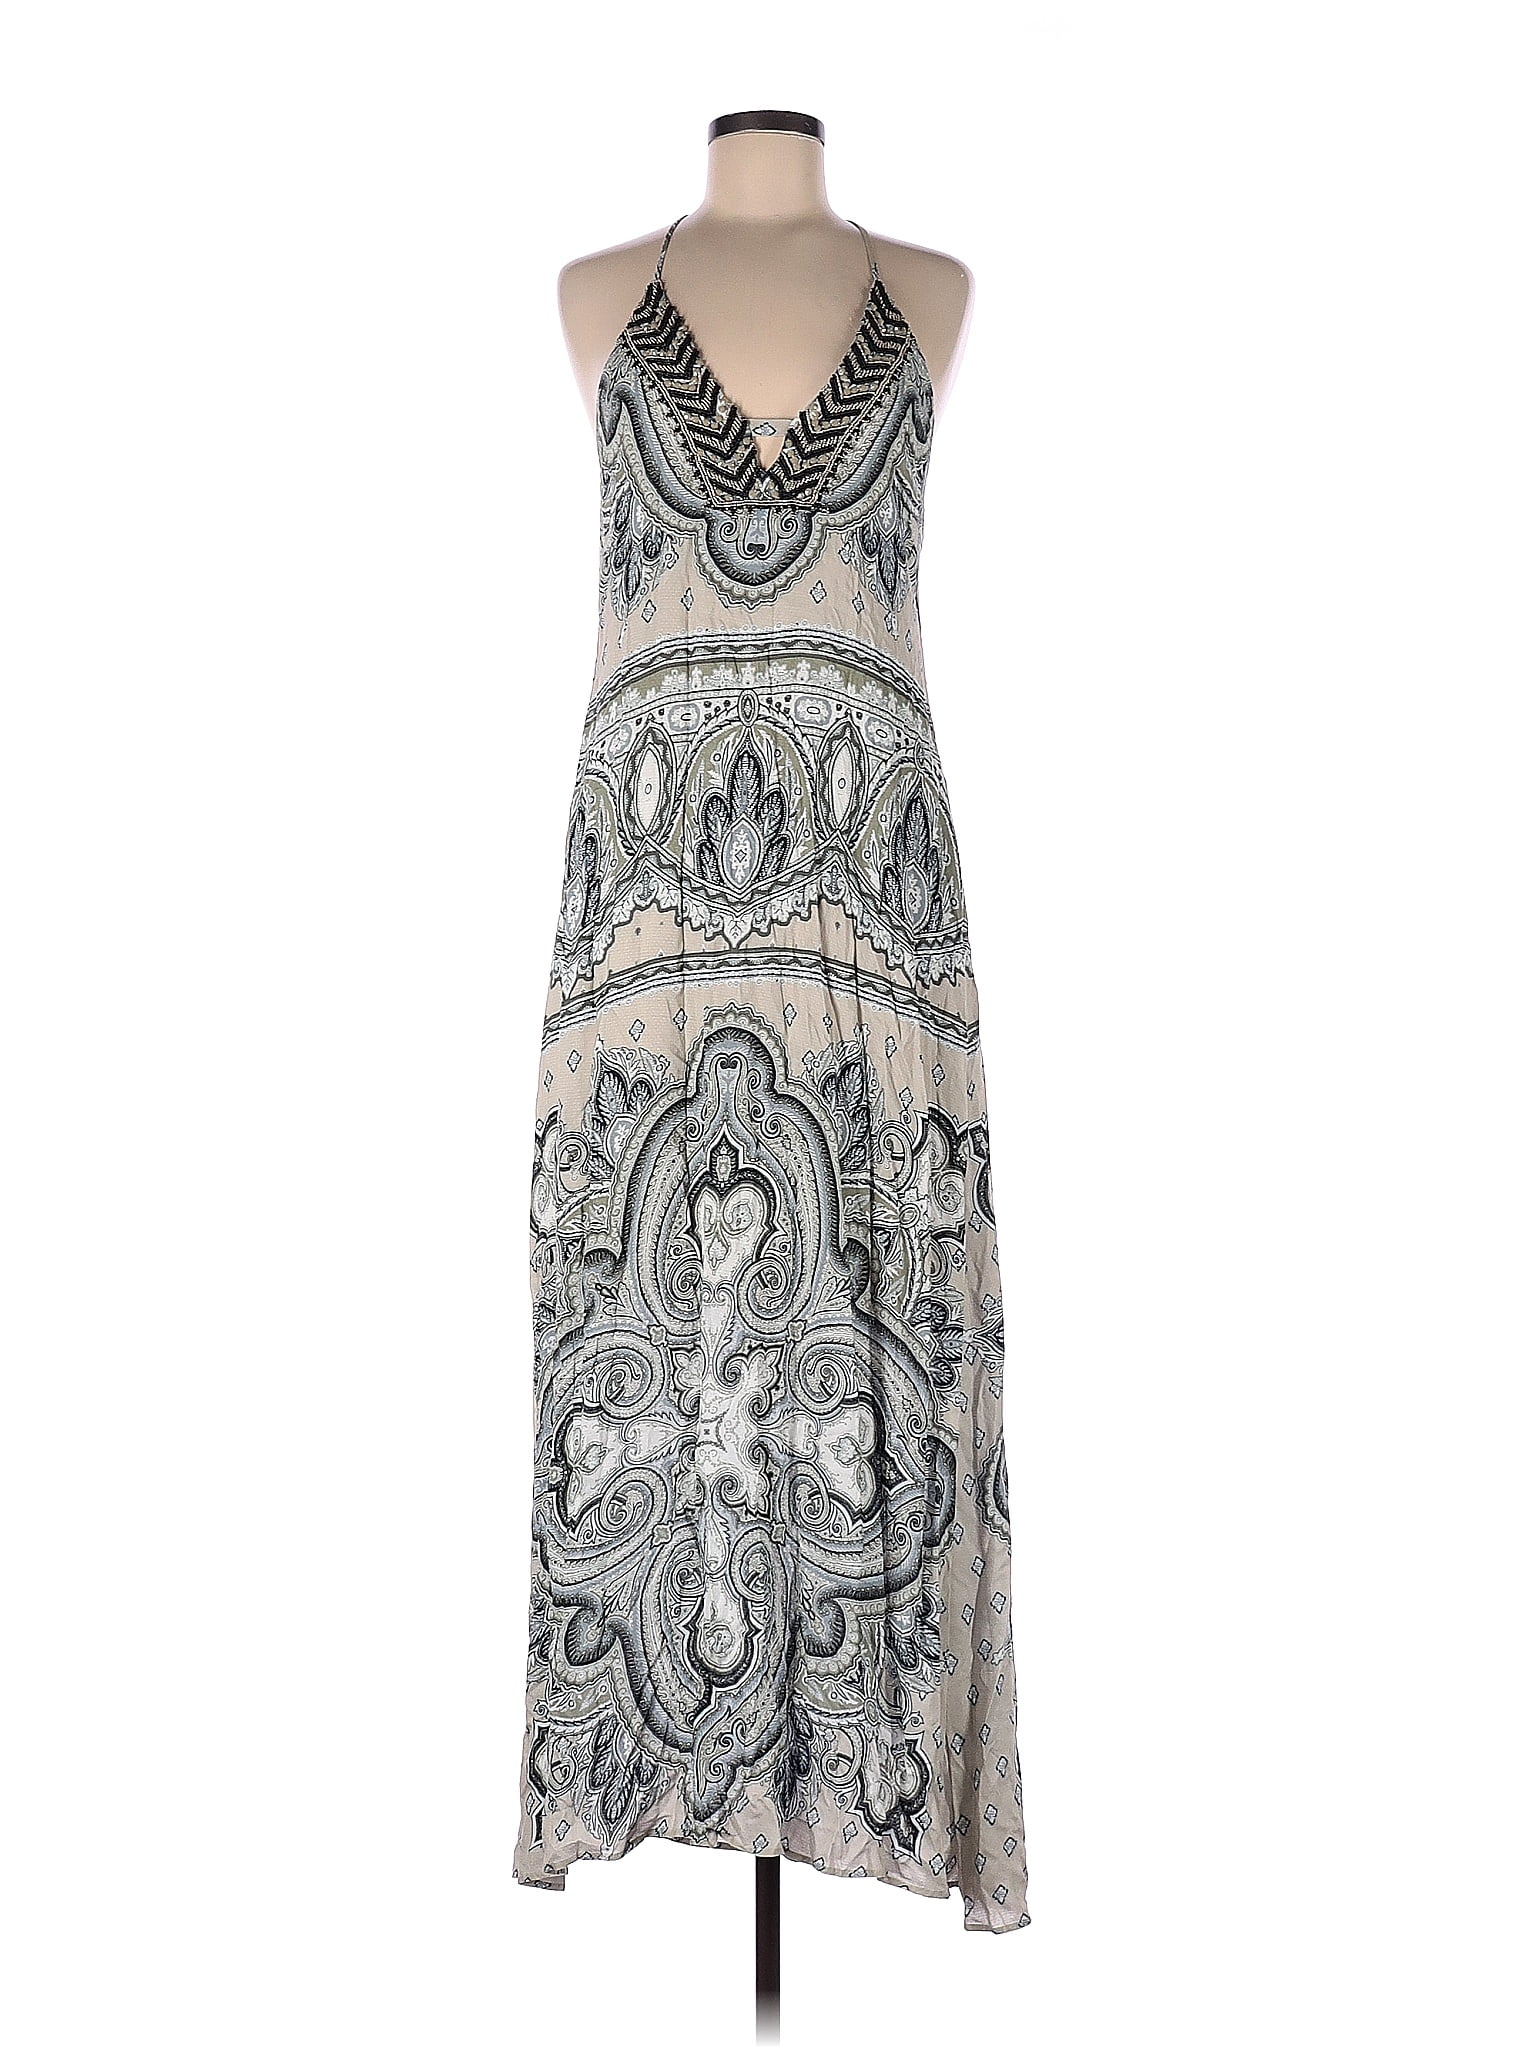 Hale Bob Multi Color Gray Casual Dress Size M - 58% off | thredUP